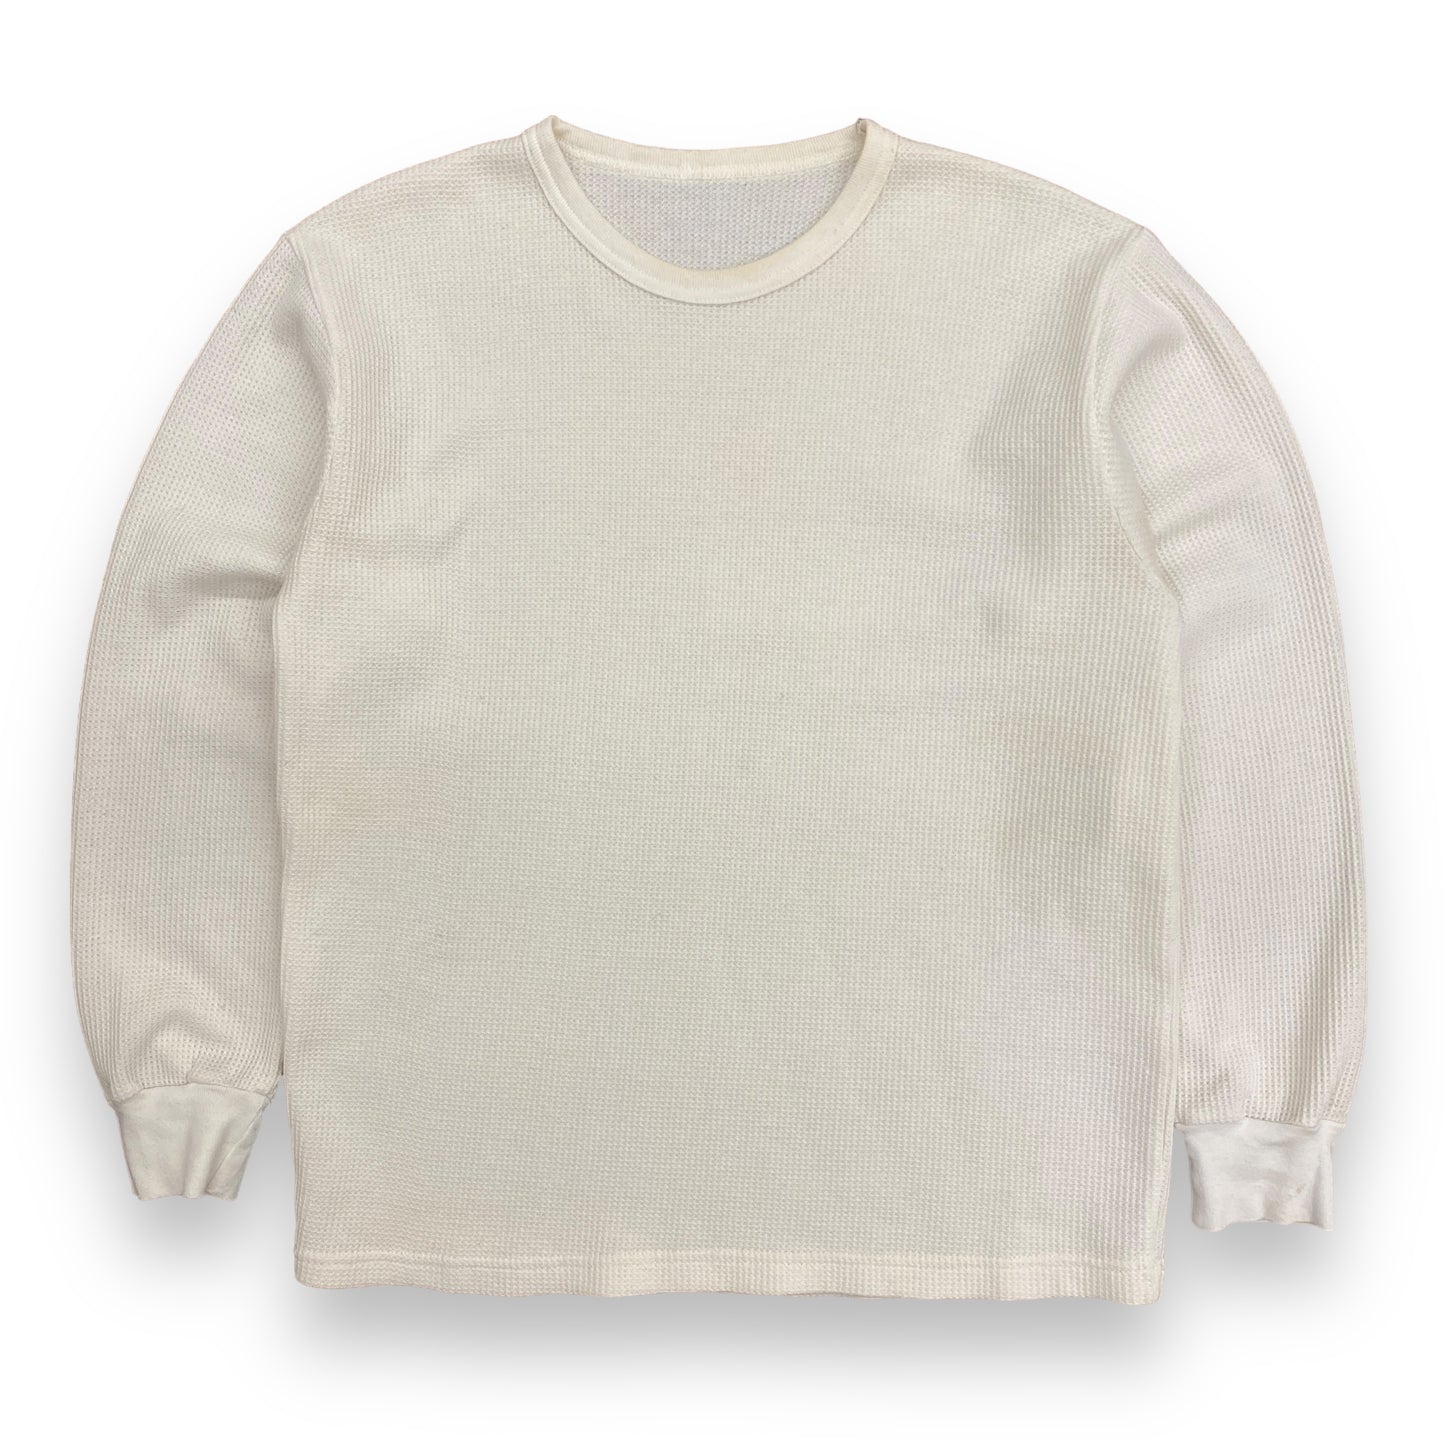 Vintage Waffle Knit Thermal Shirt - Size M/L